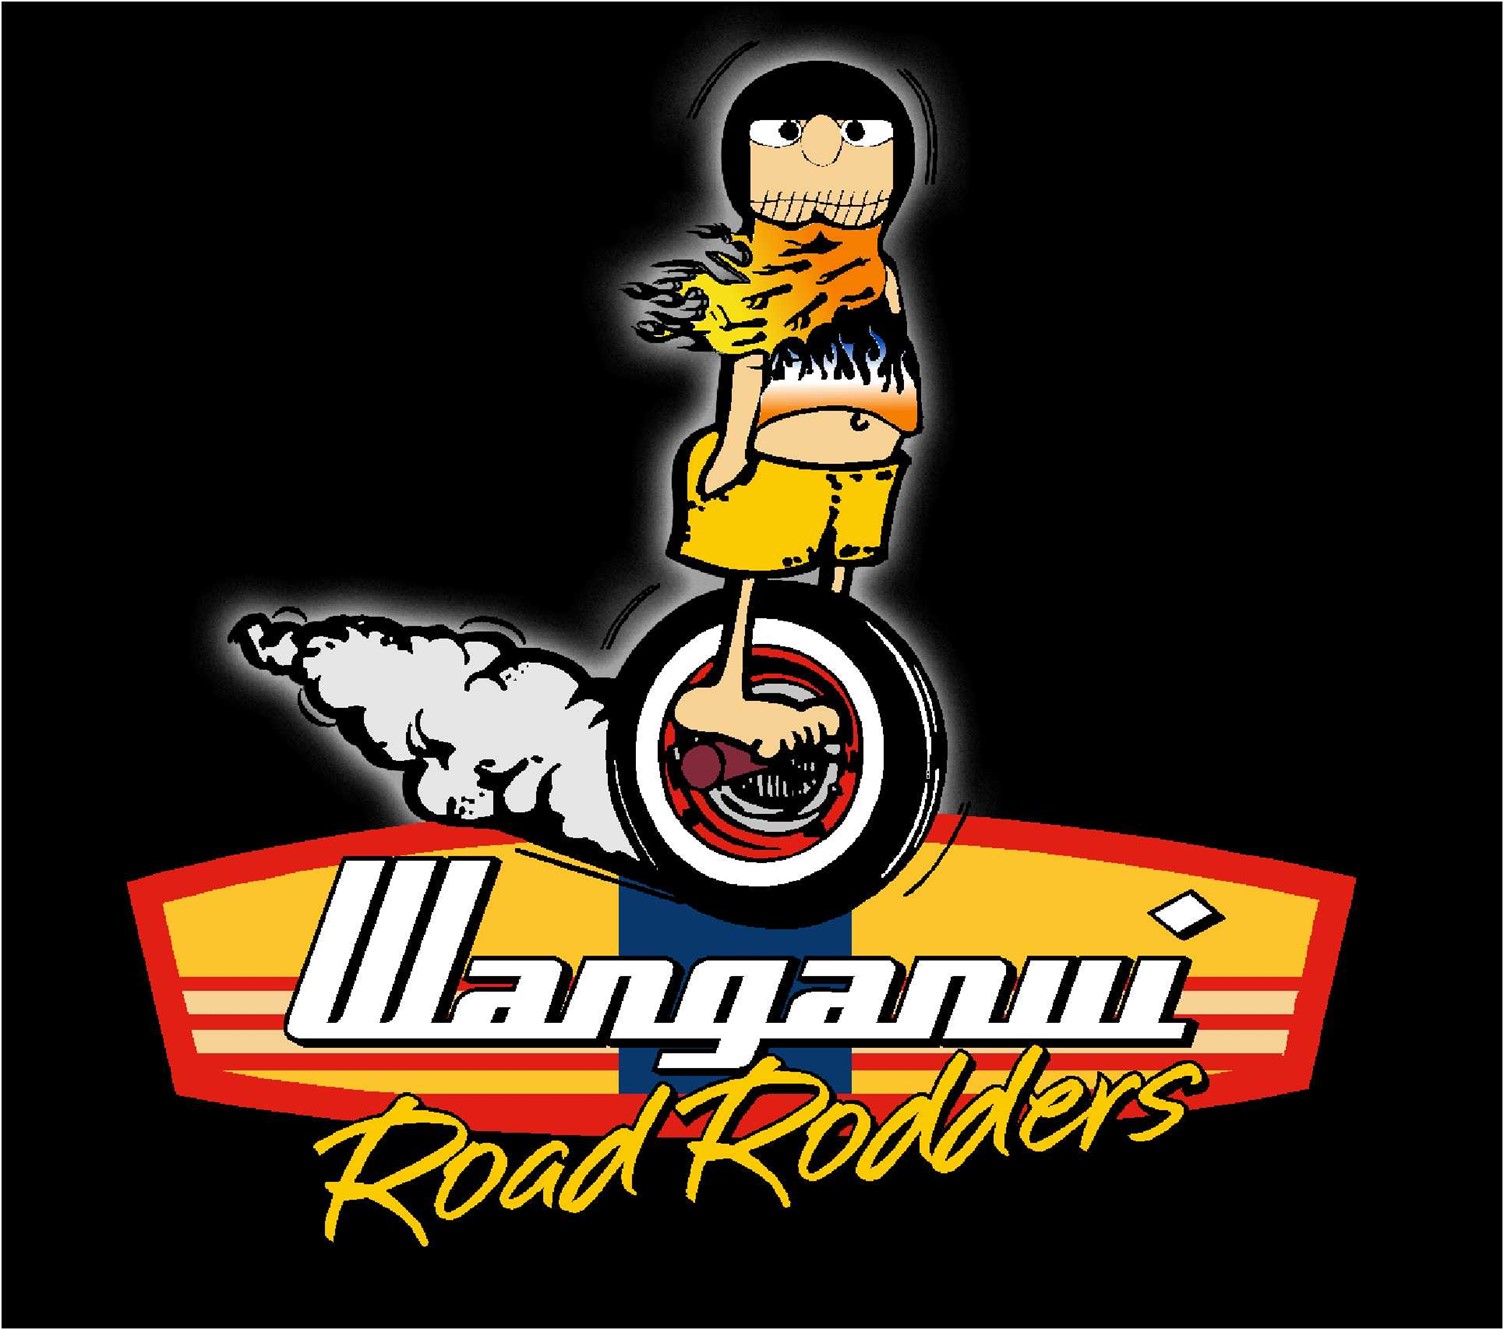 Wanganui Road Rodders Inc